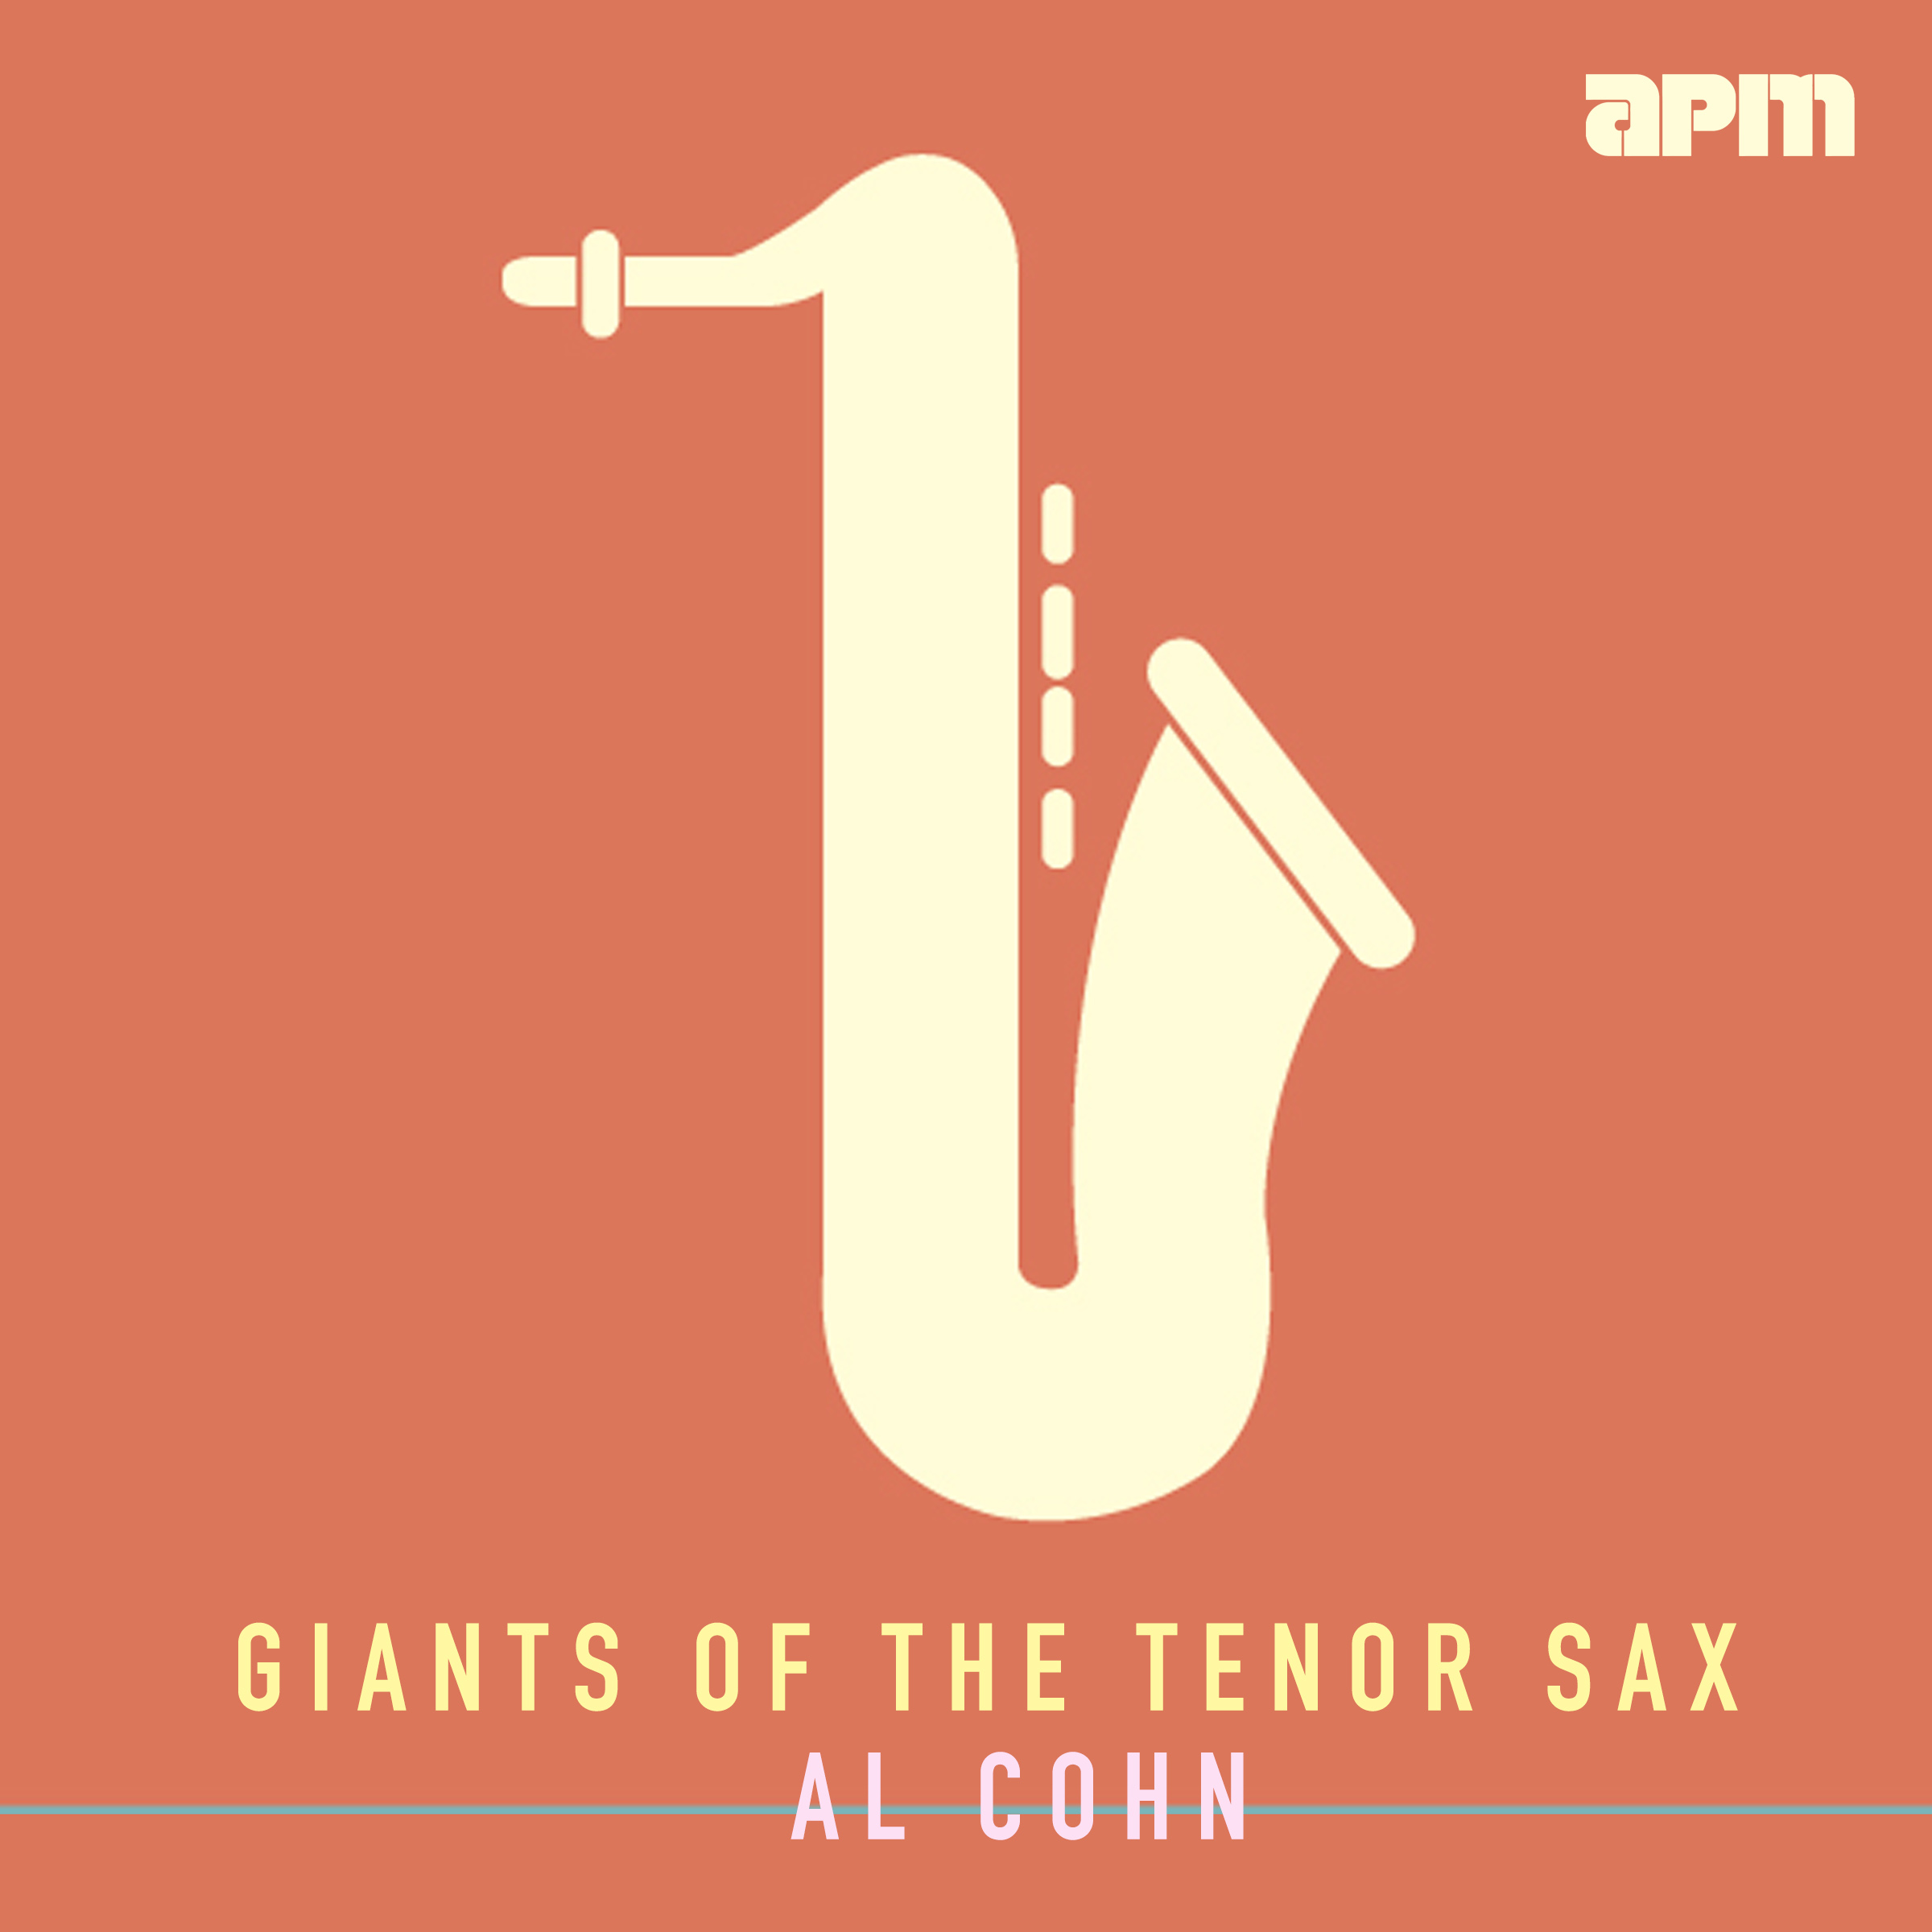 Giants of the Tenor Sax